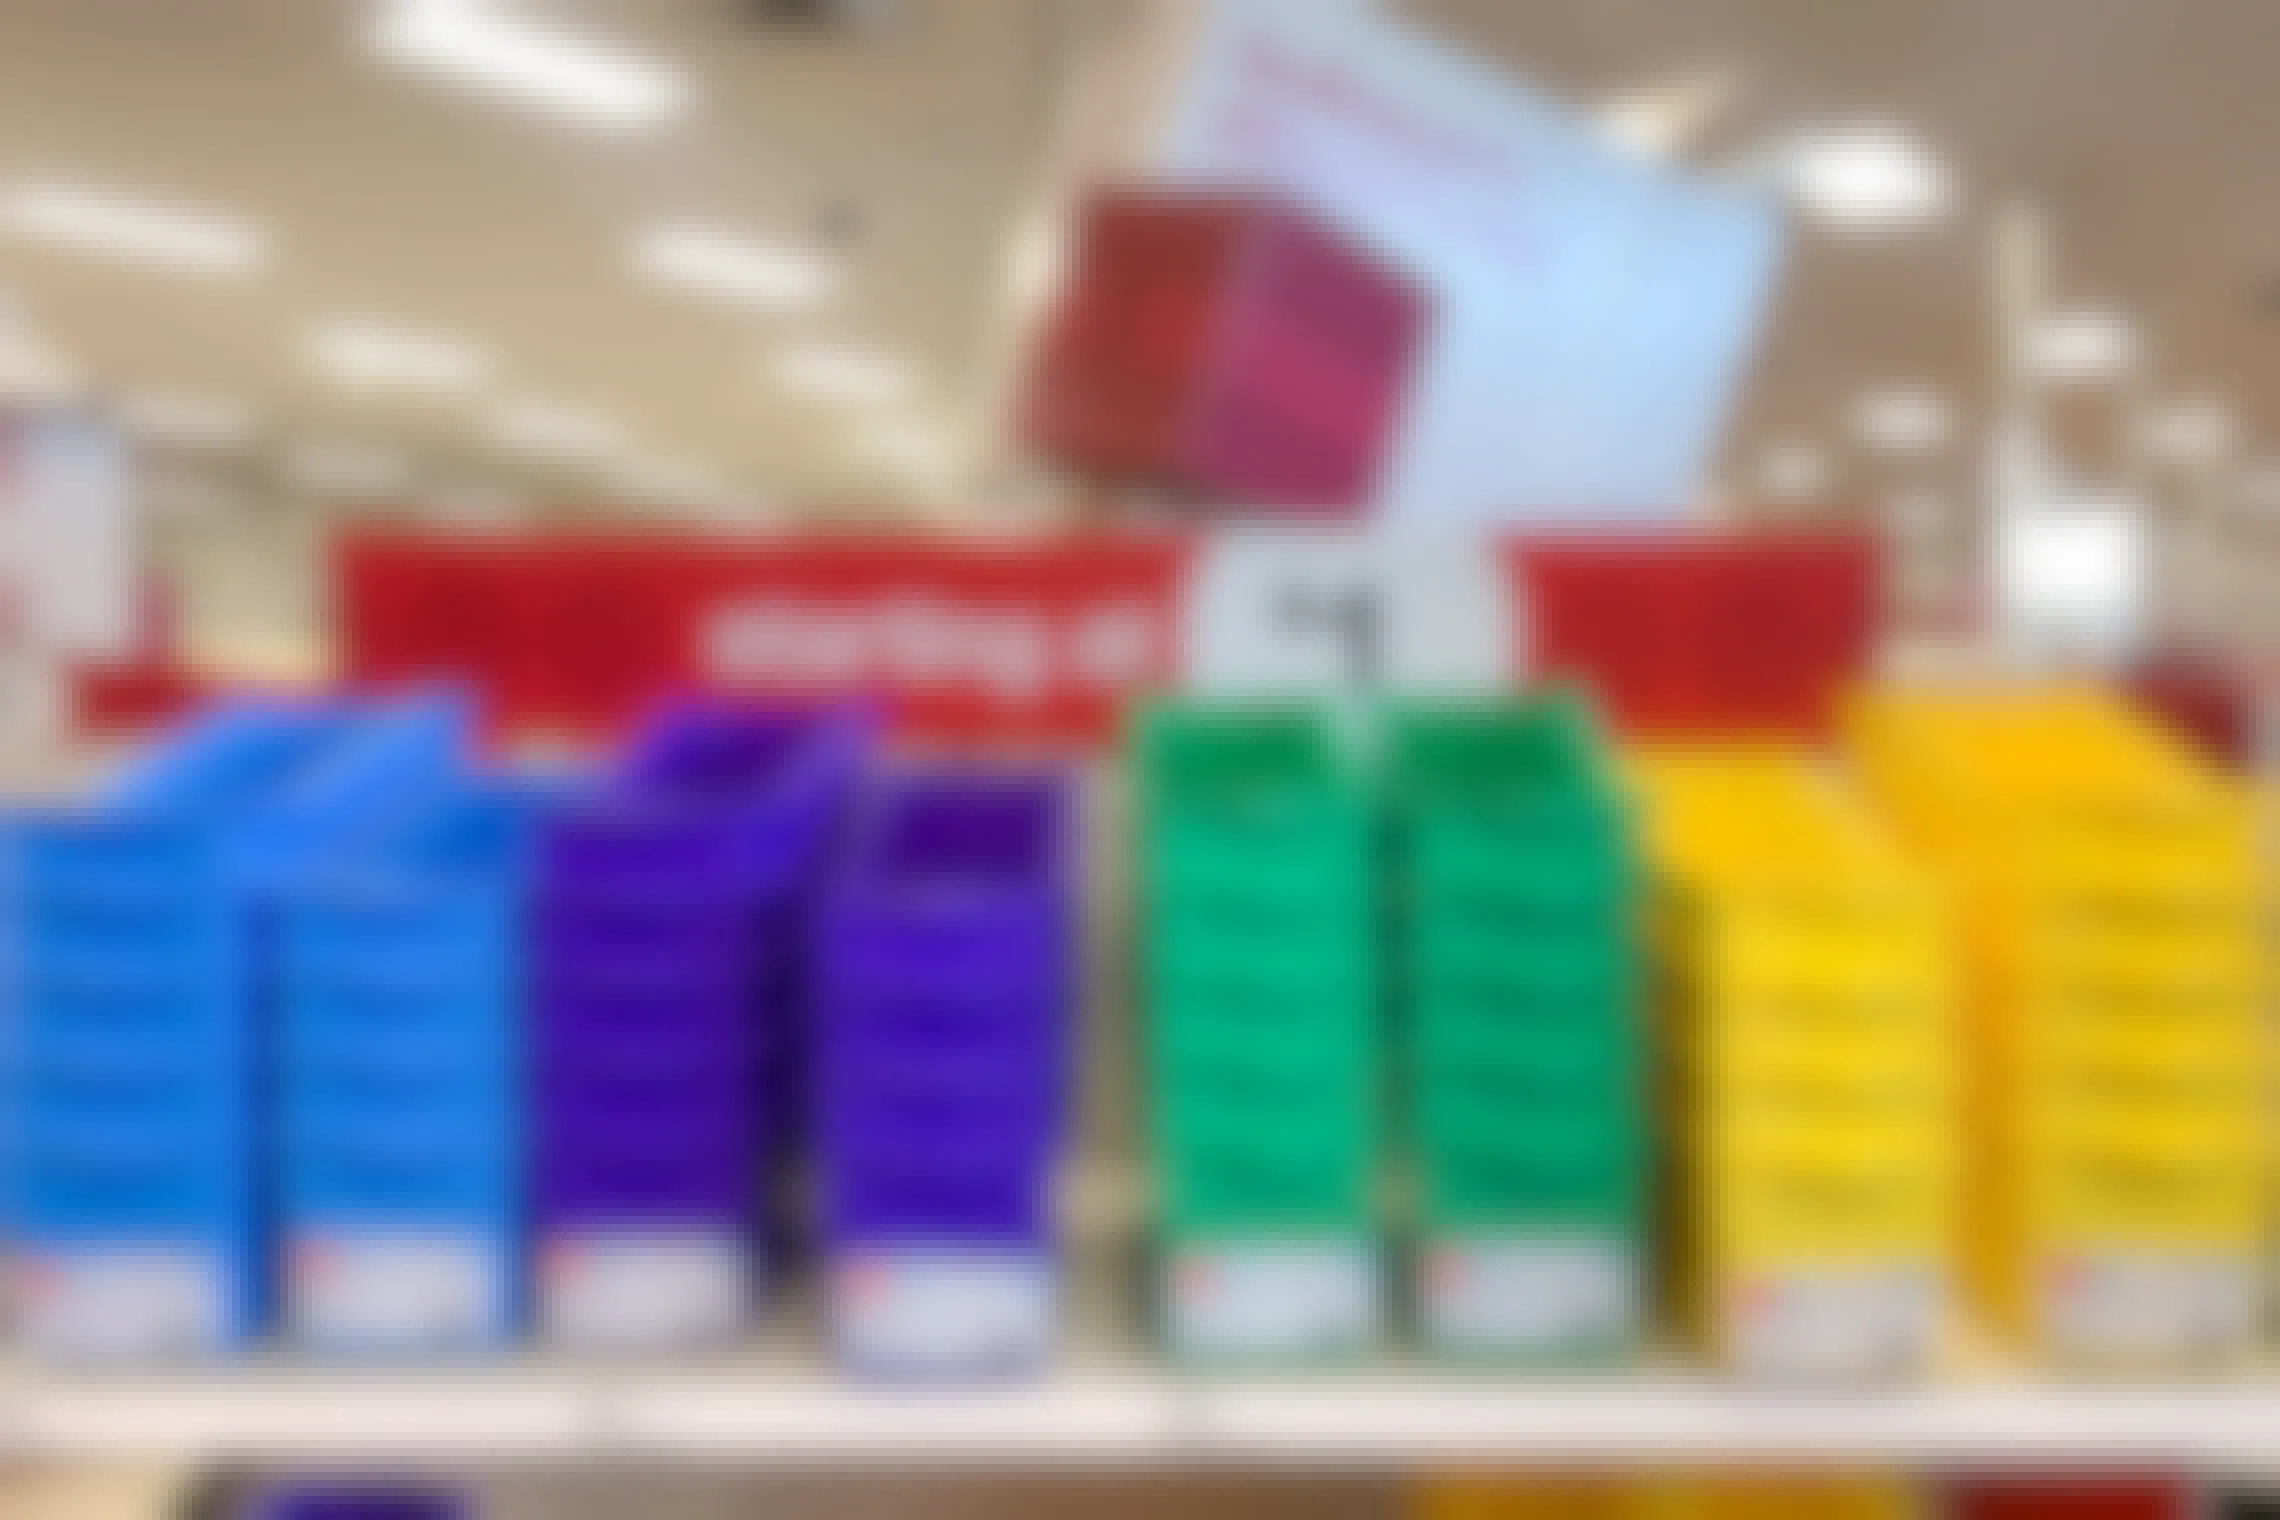 Colorful storage bins at Target.